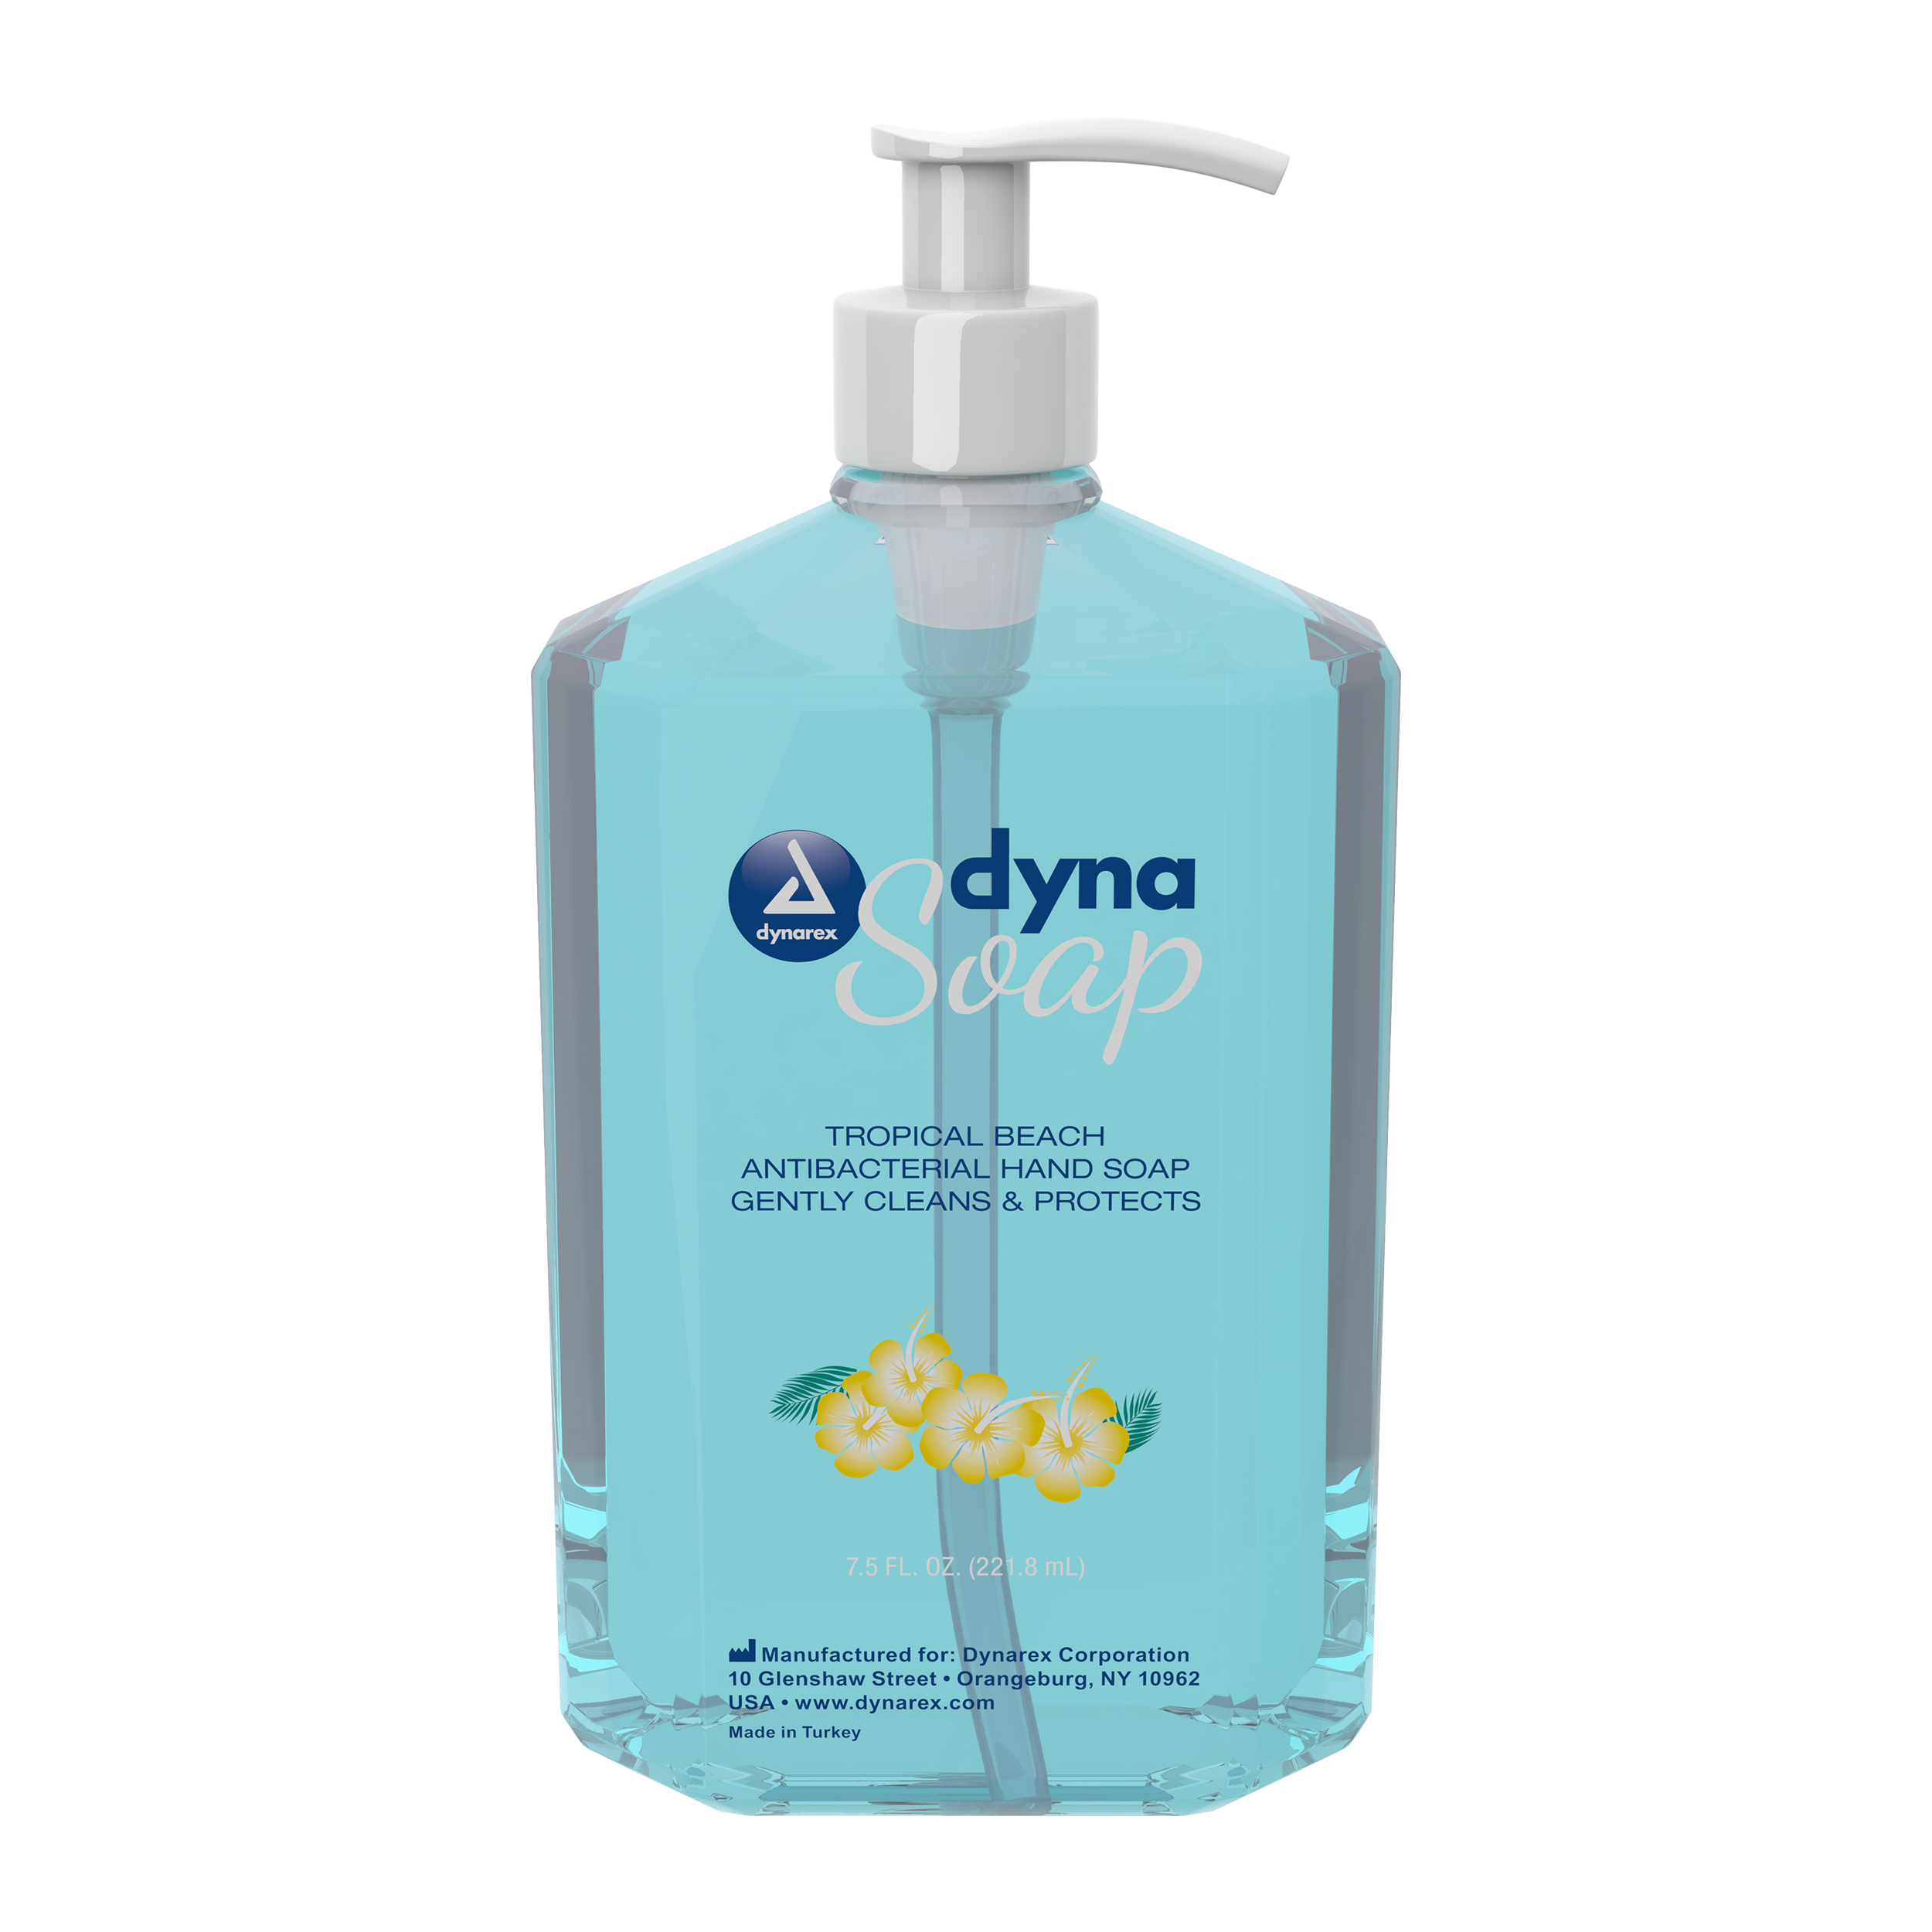 dynaSoap Antibacterial Soap - 7.5 oz